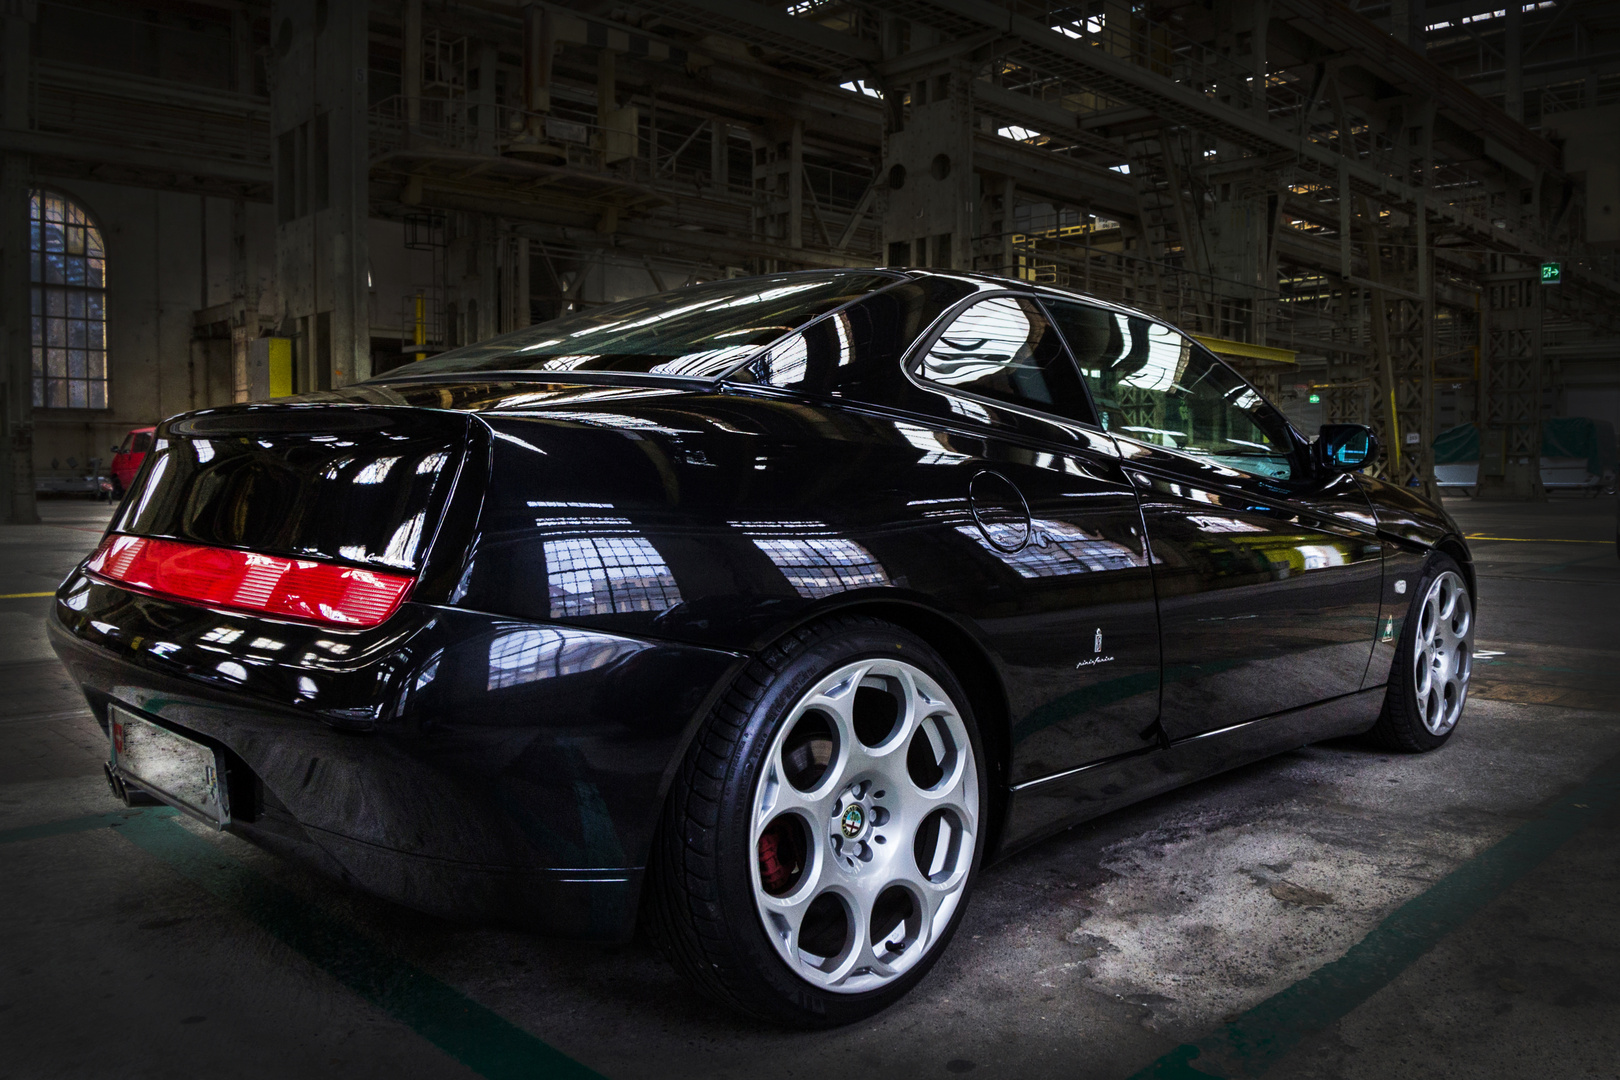 Alfa Romeo GTV 916 Industrial